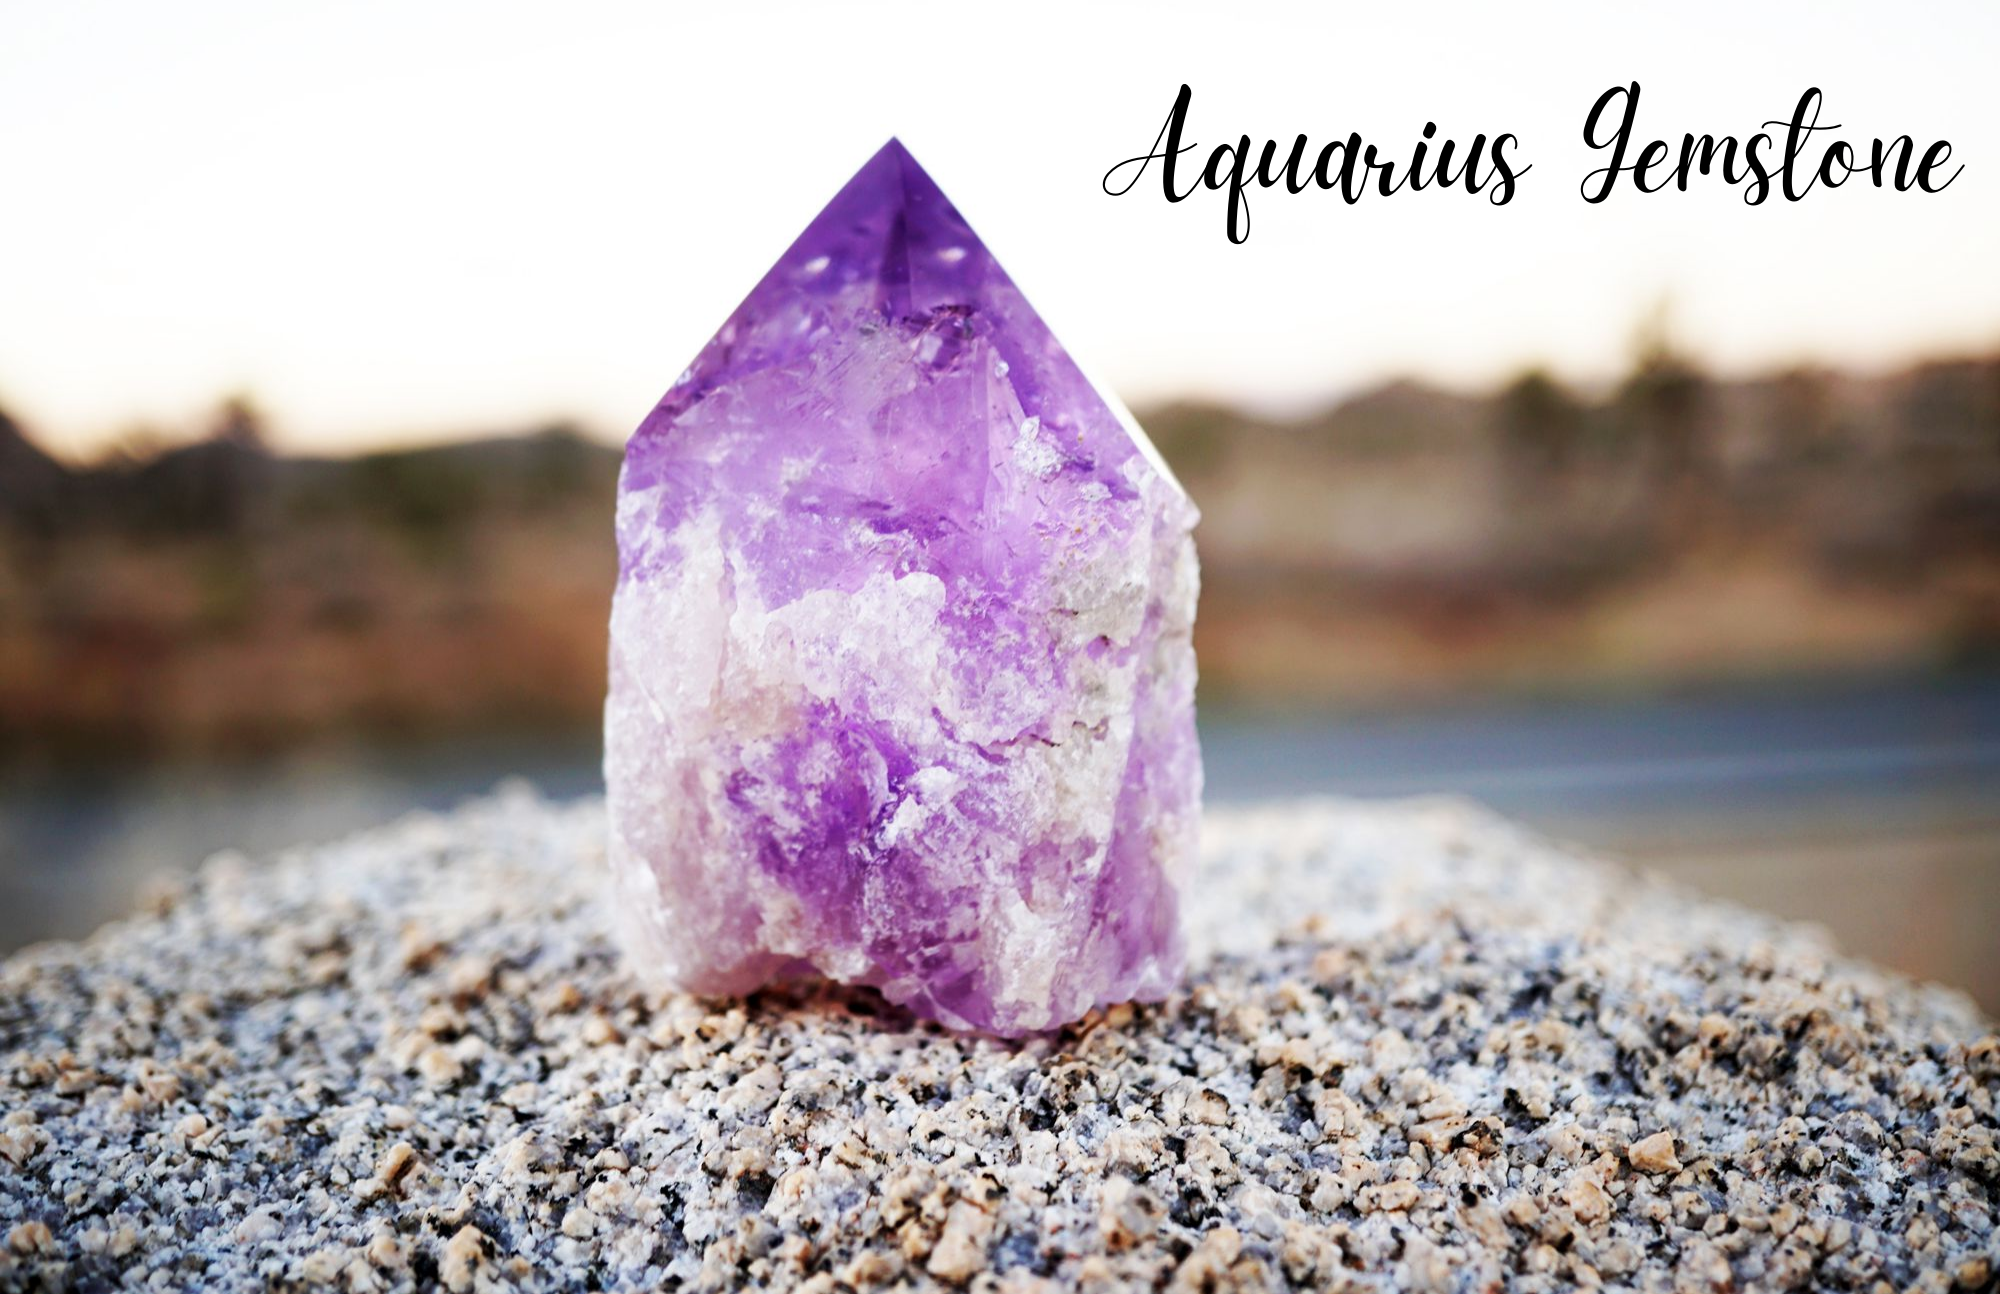 Aquarius Gemstone - The Purple Fiery Gemstone With Tons Of Benefits